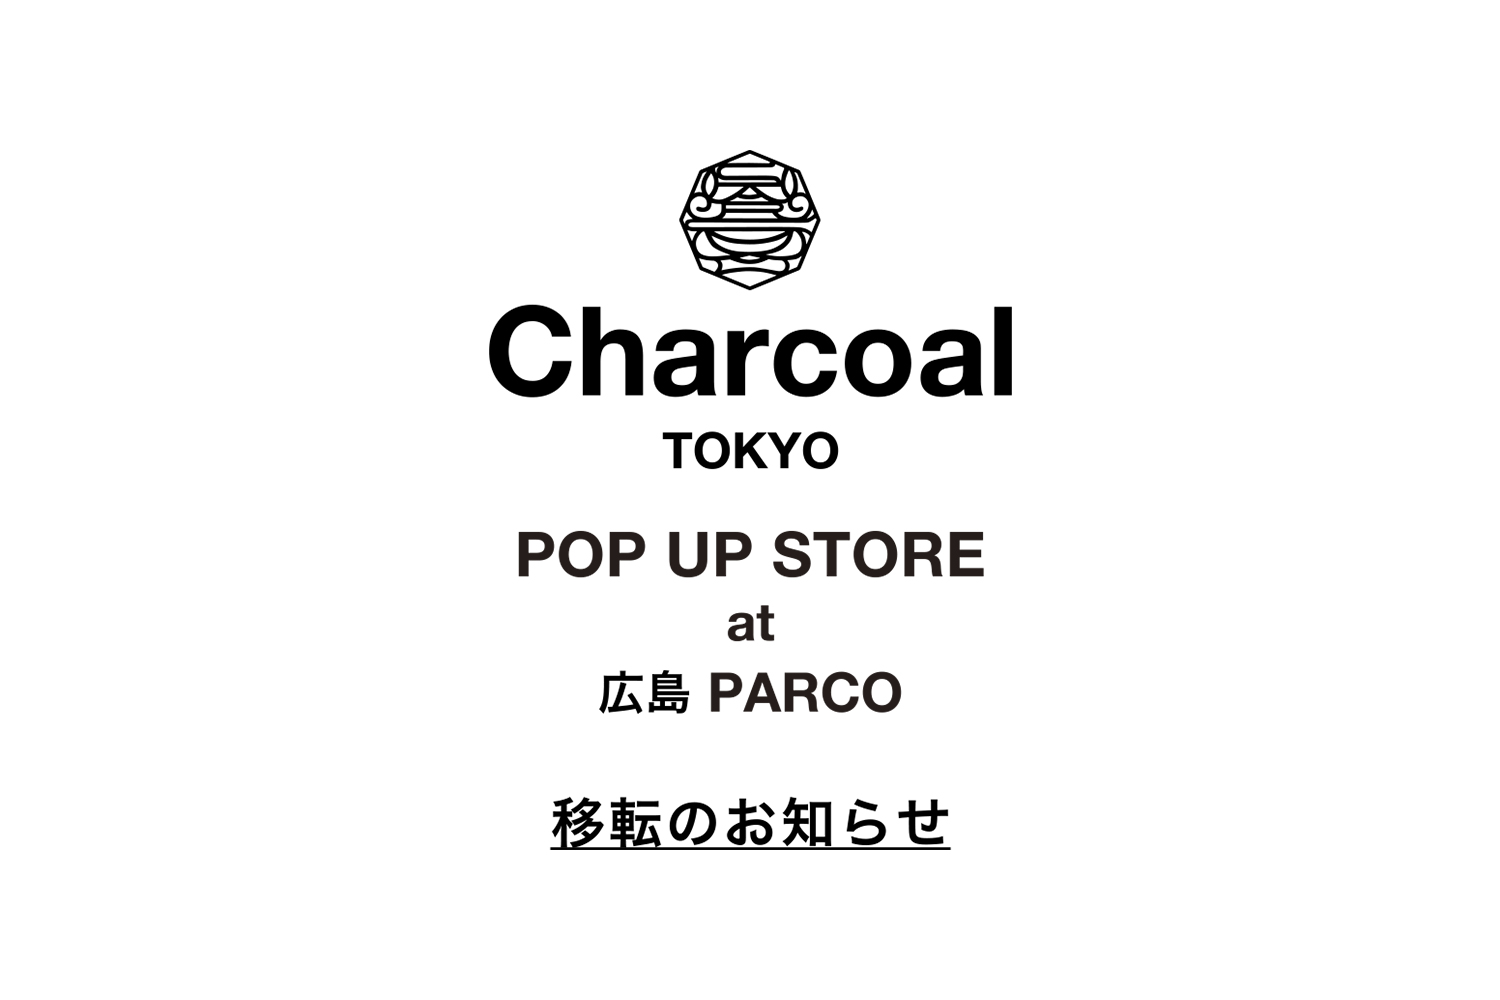 Charcoal TOKYO Pop-Up Store 移転のお知らせ